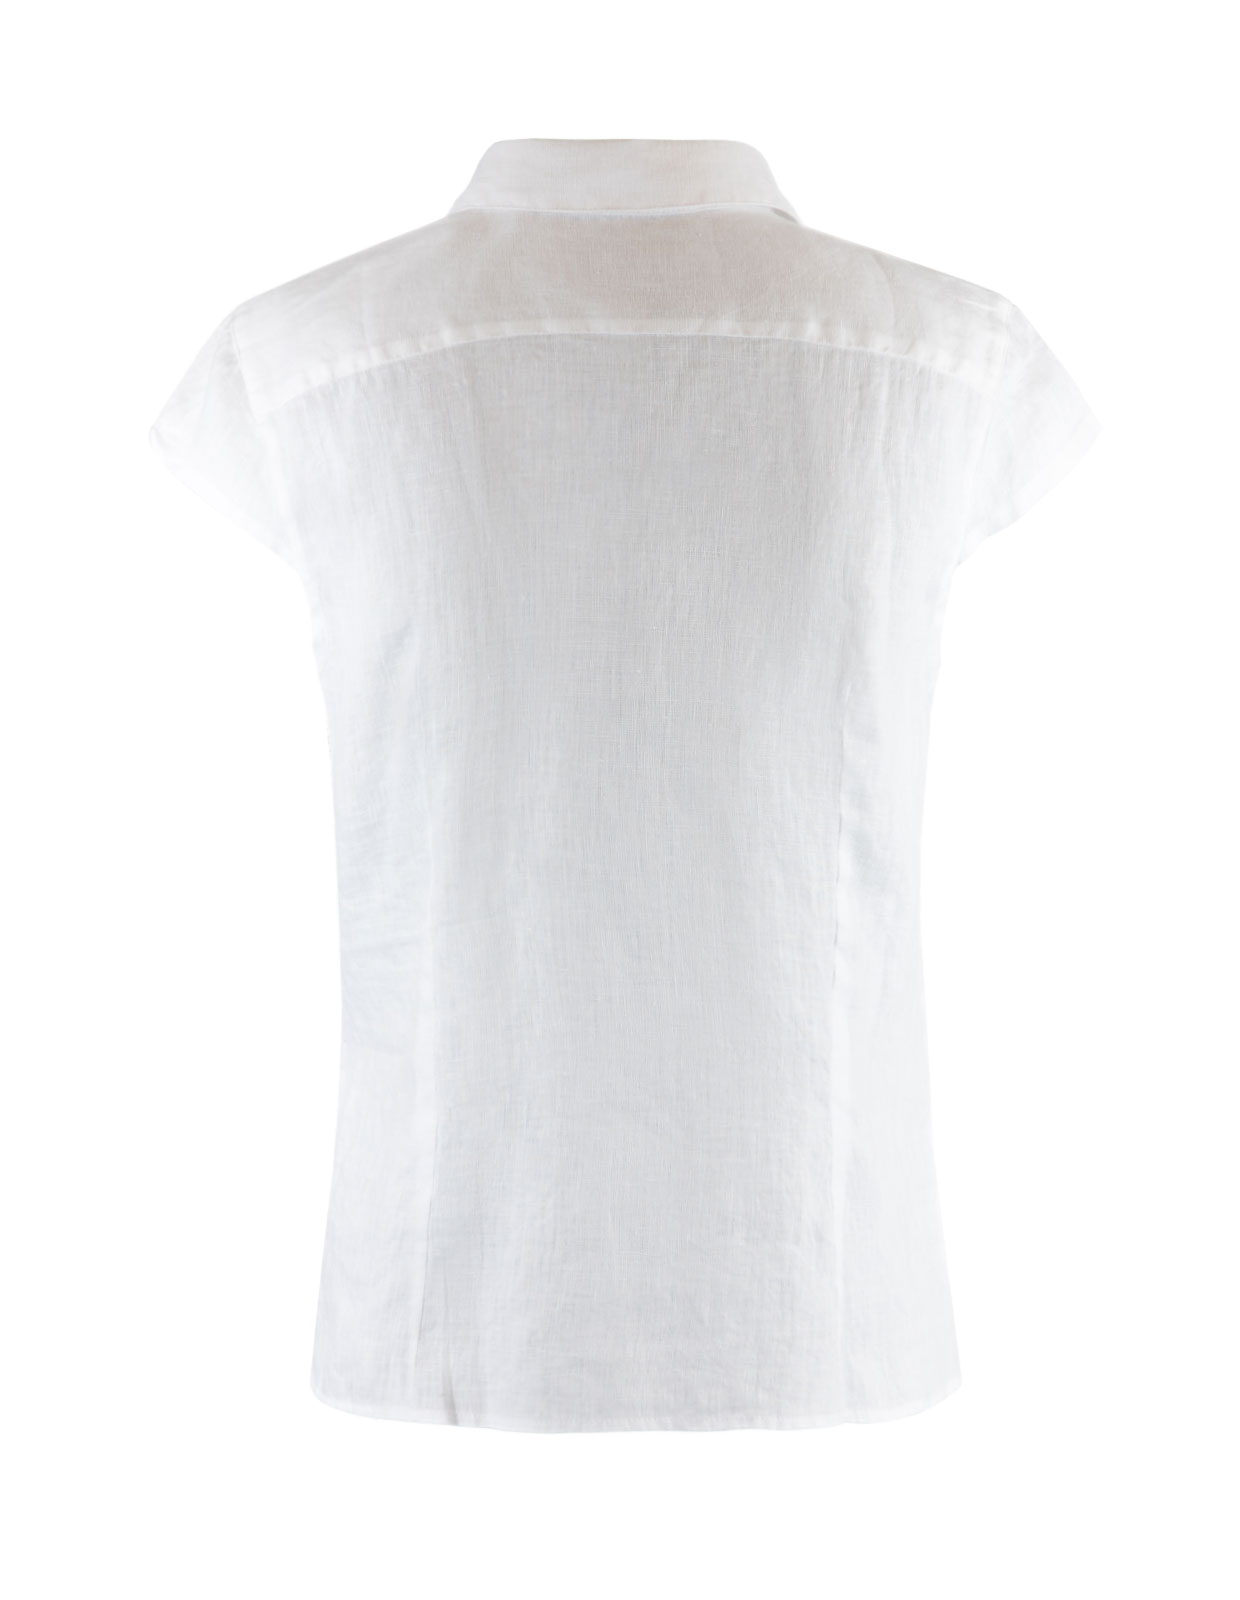 Linnen Shirt Cap Sleeve White